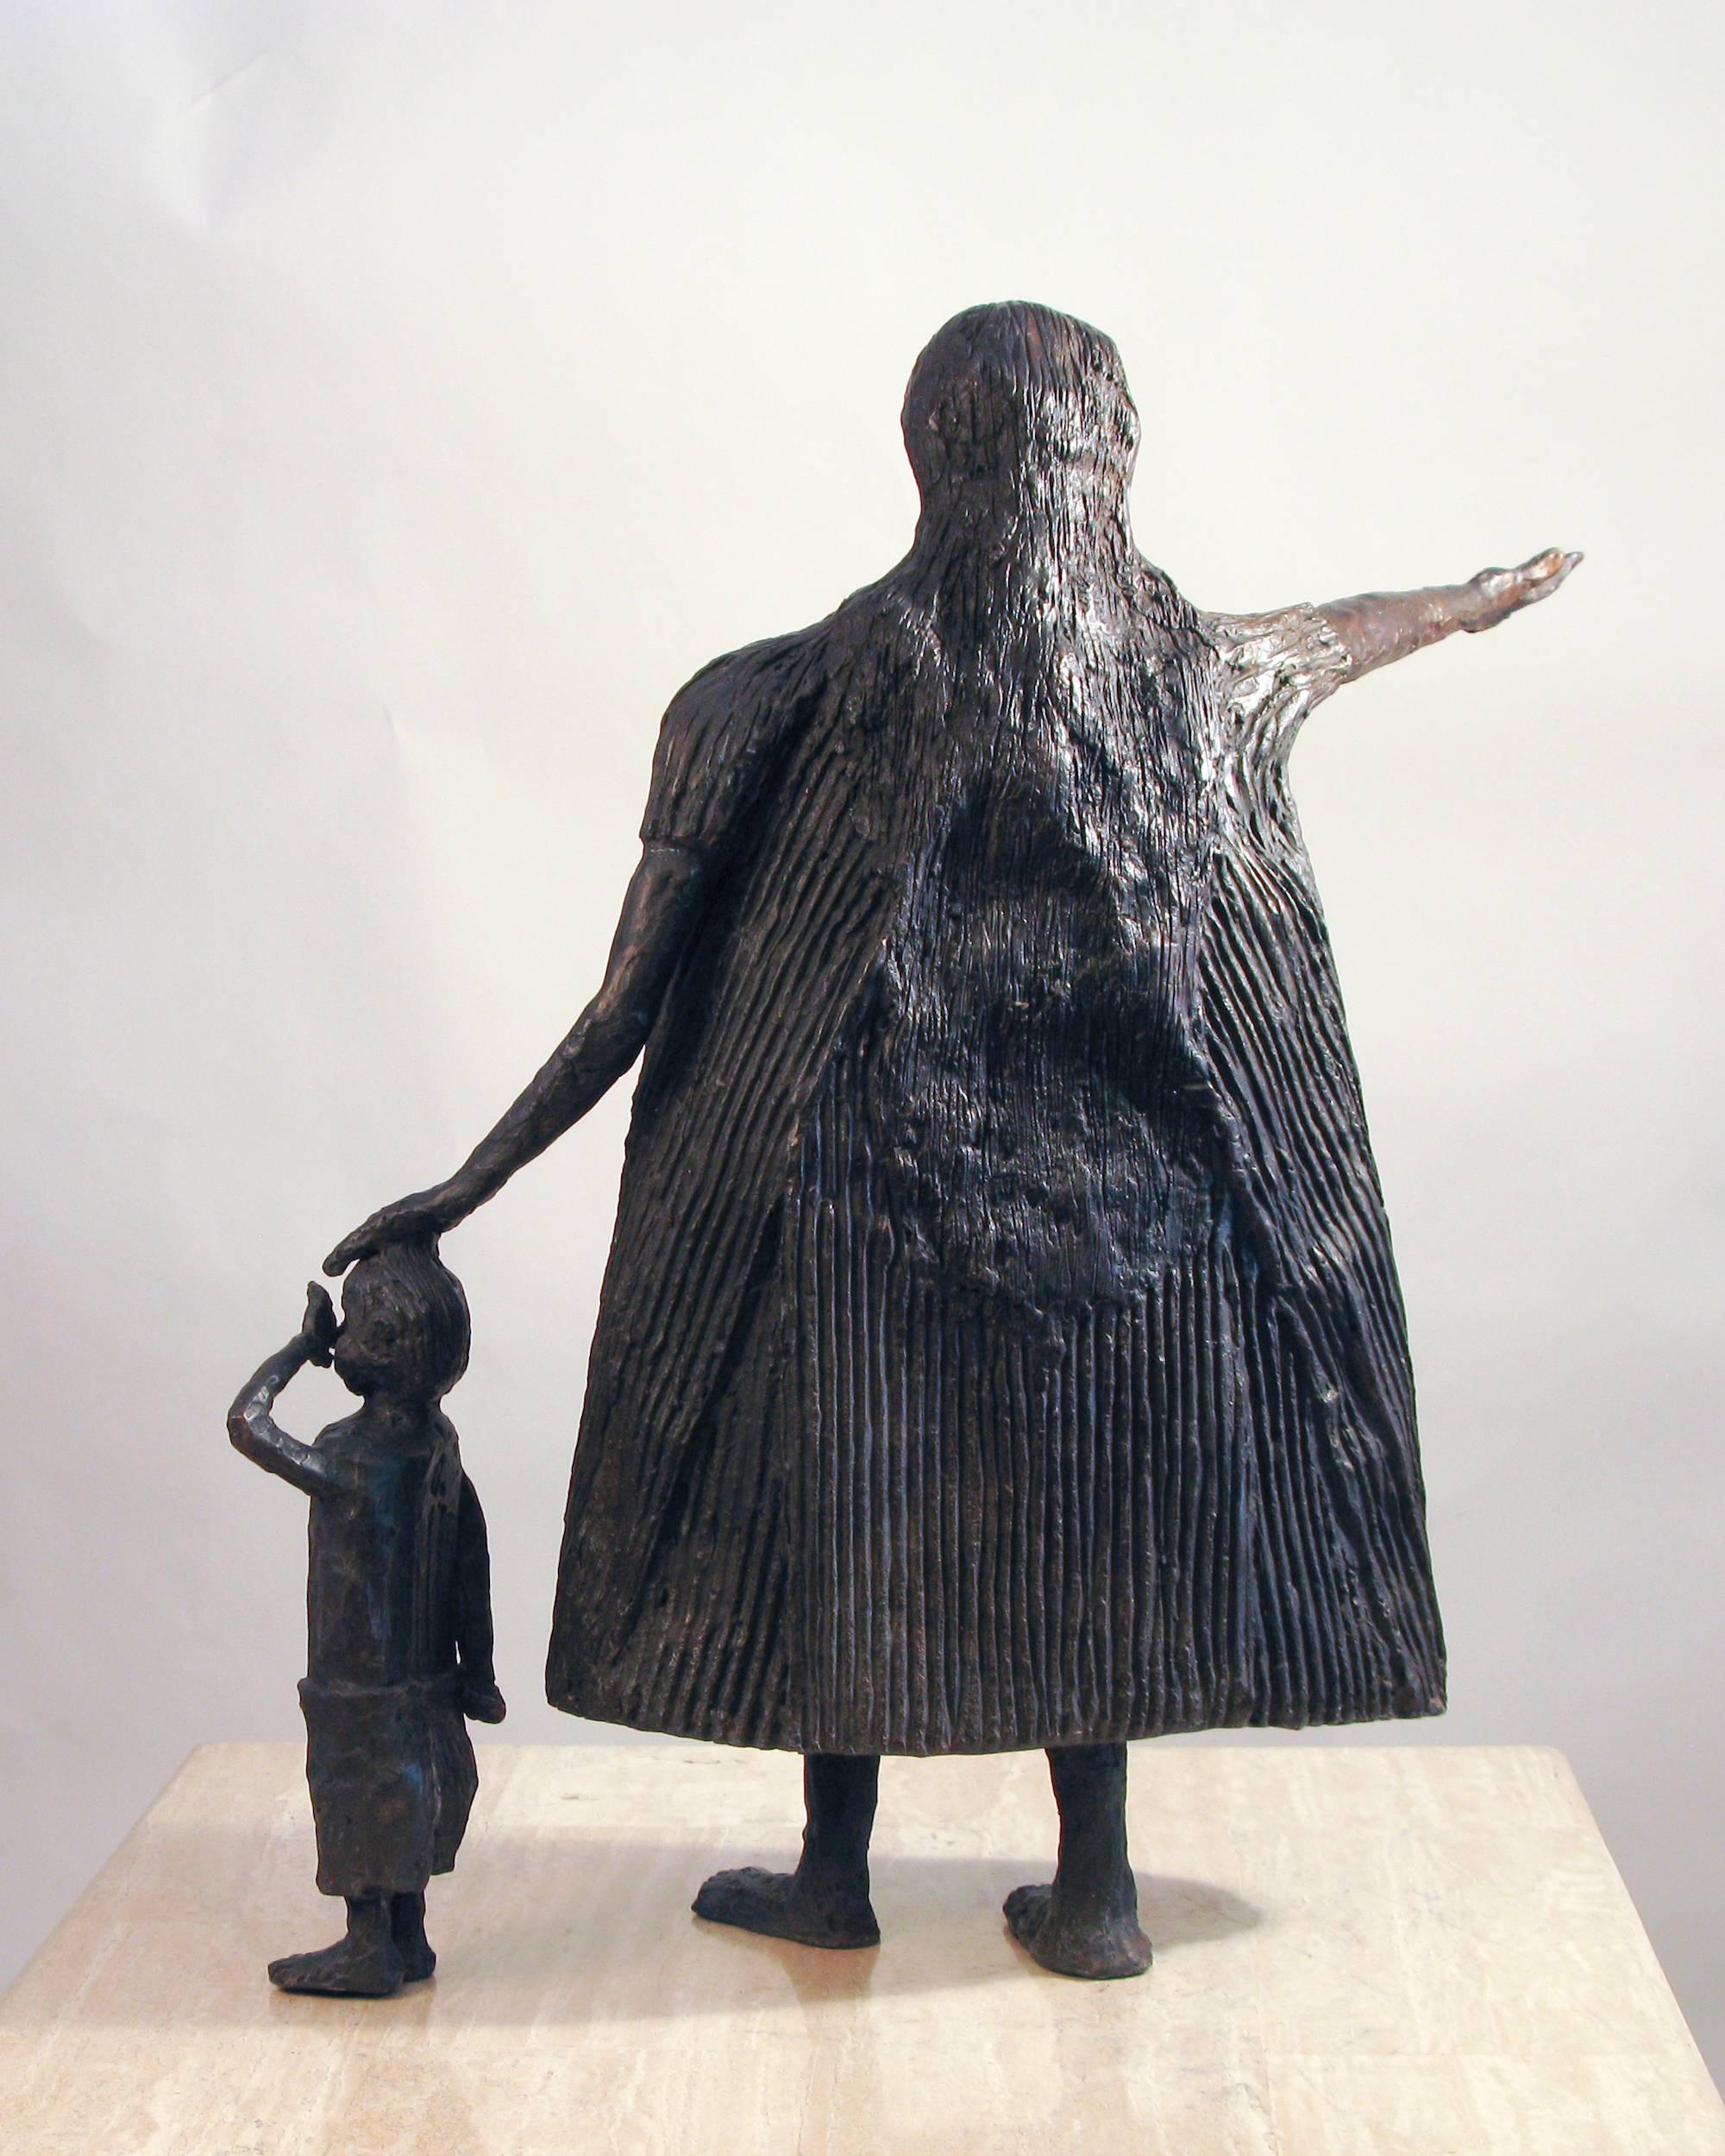 Reaching for the Future - Sculpture by Eduardo Oropeza